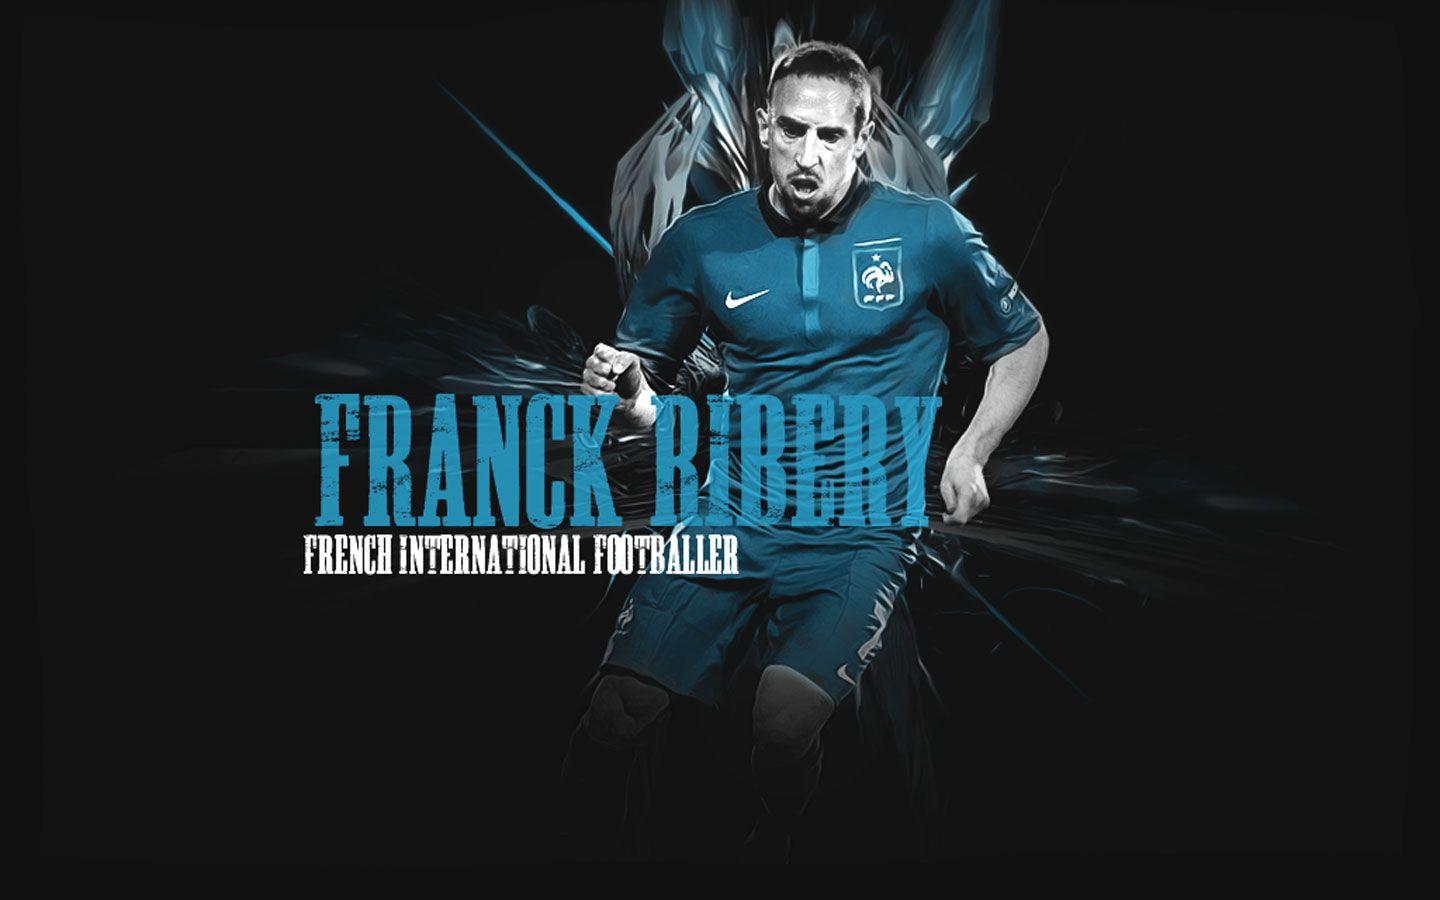 Franck Ribery France 2012. Wallpaper, Photo, Image and Profile